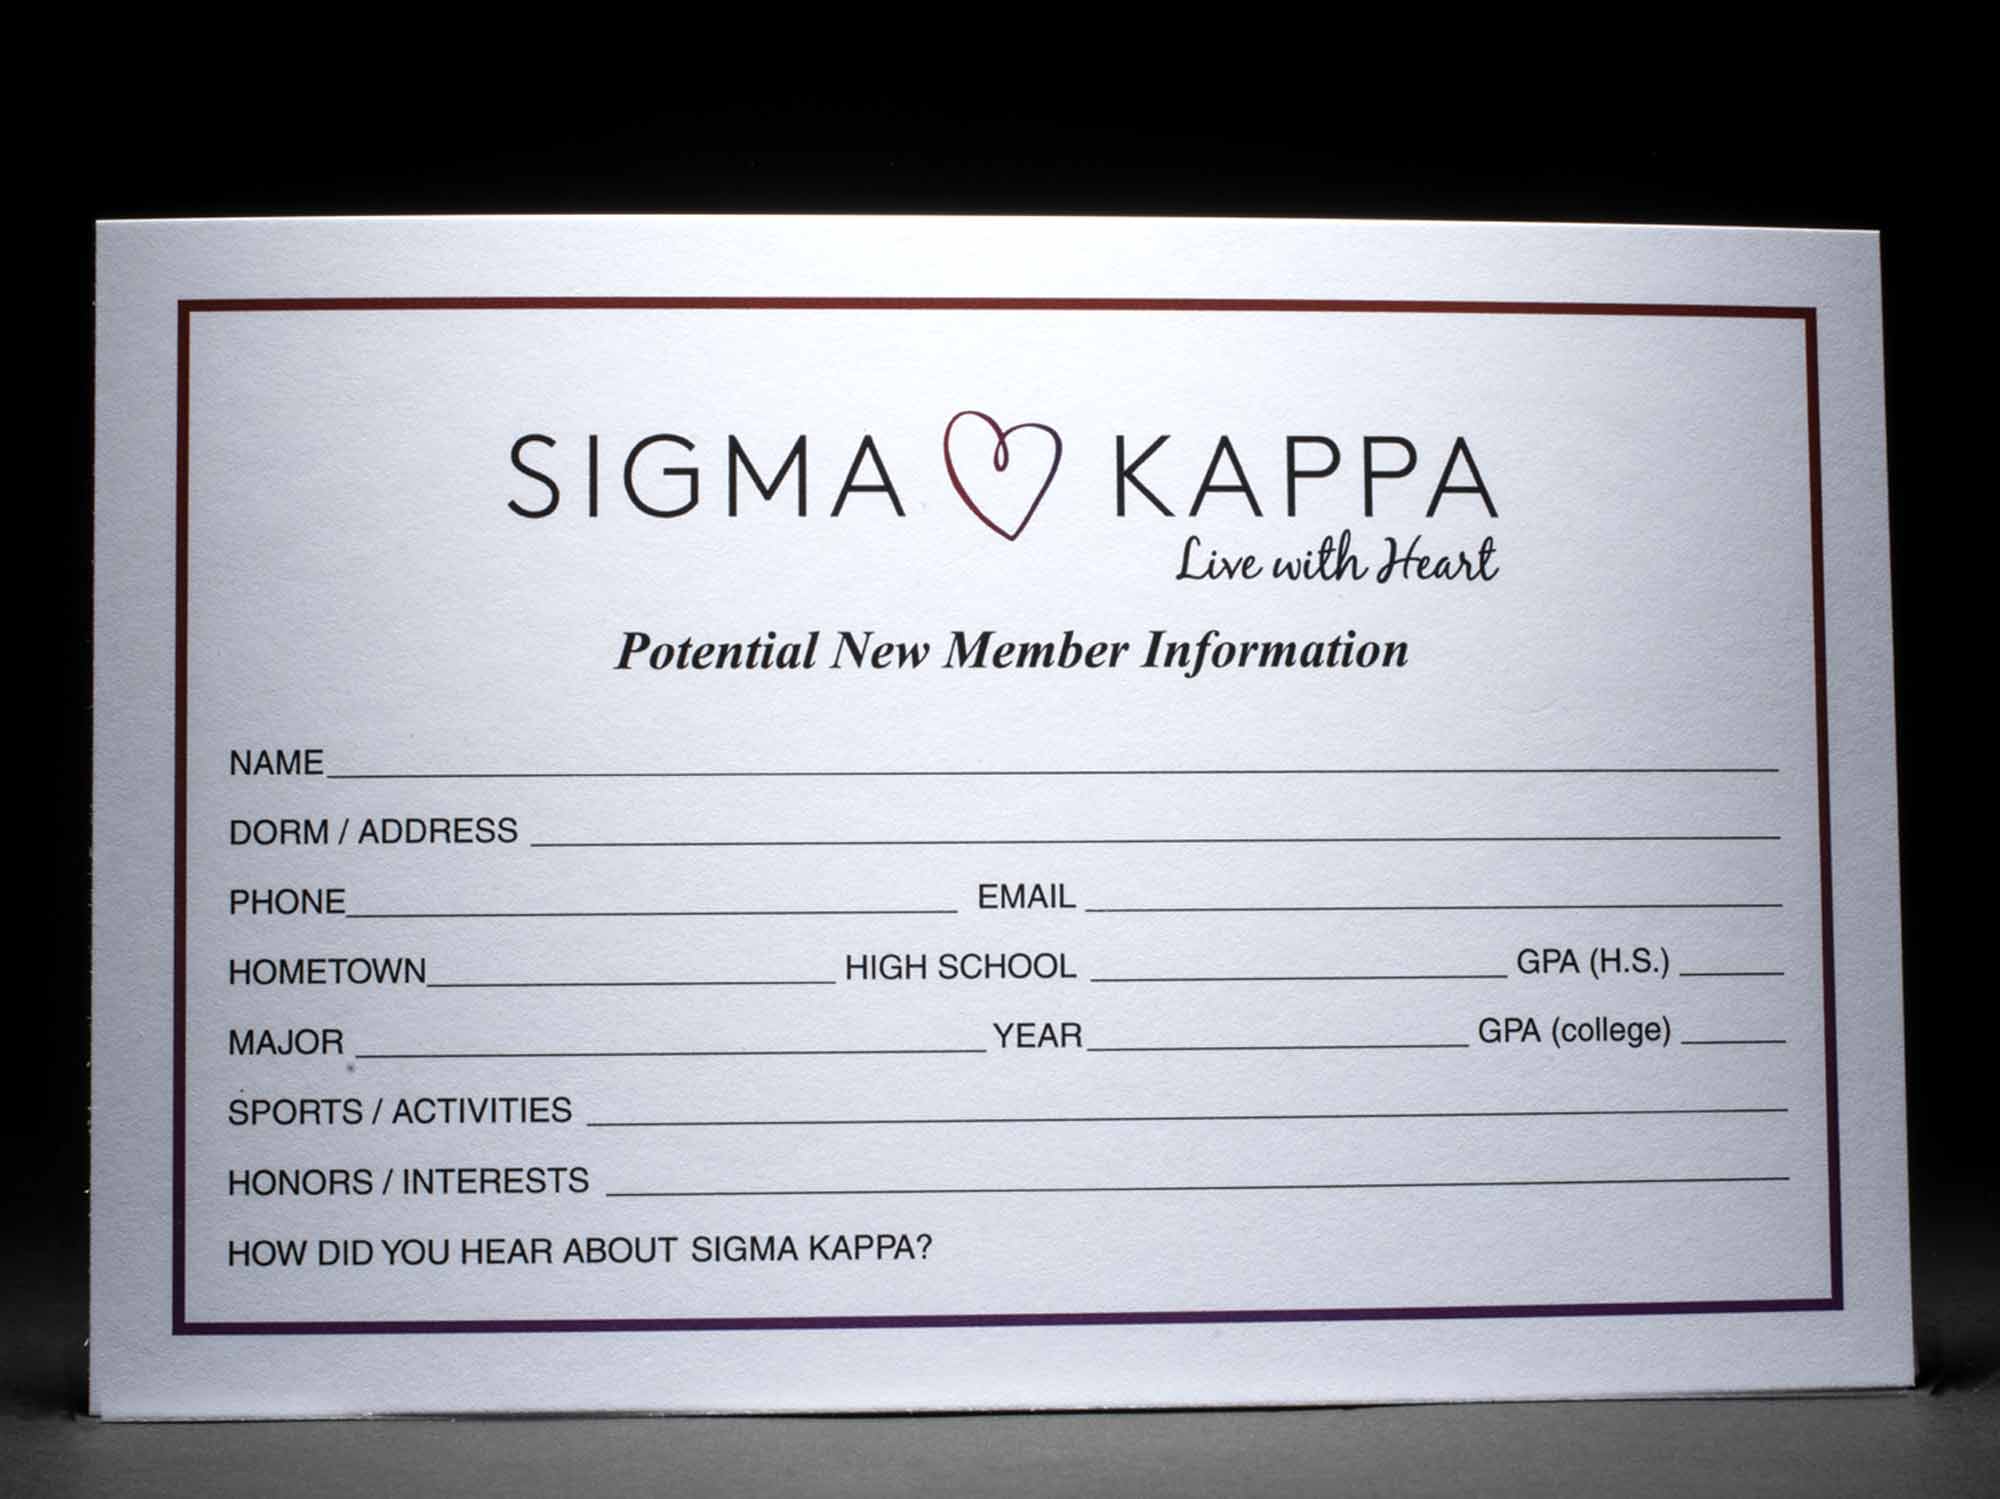 Rushee Information Cards Sigma Kappa